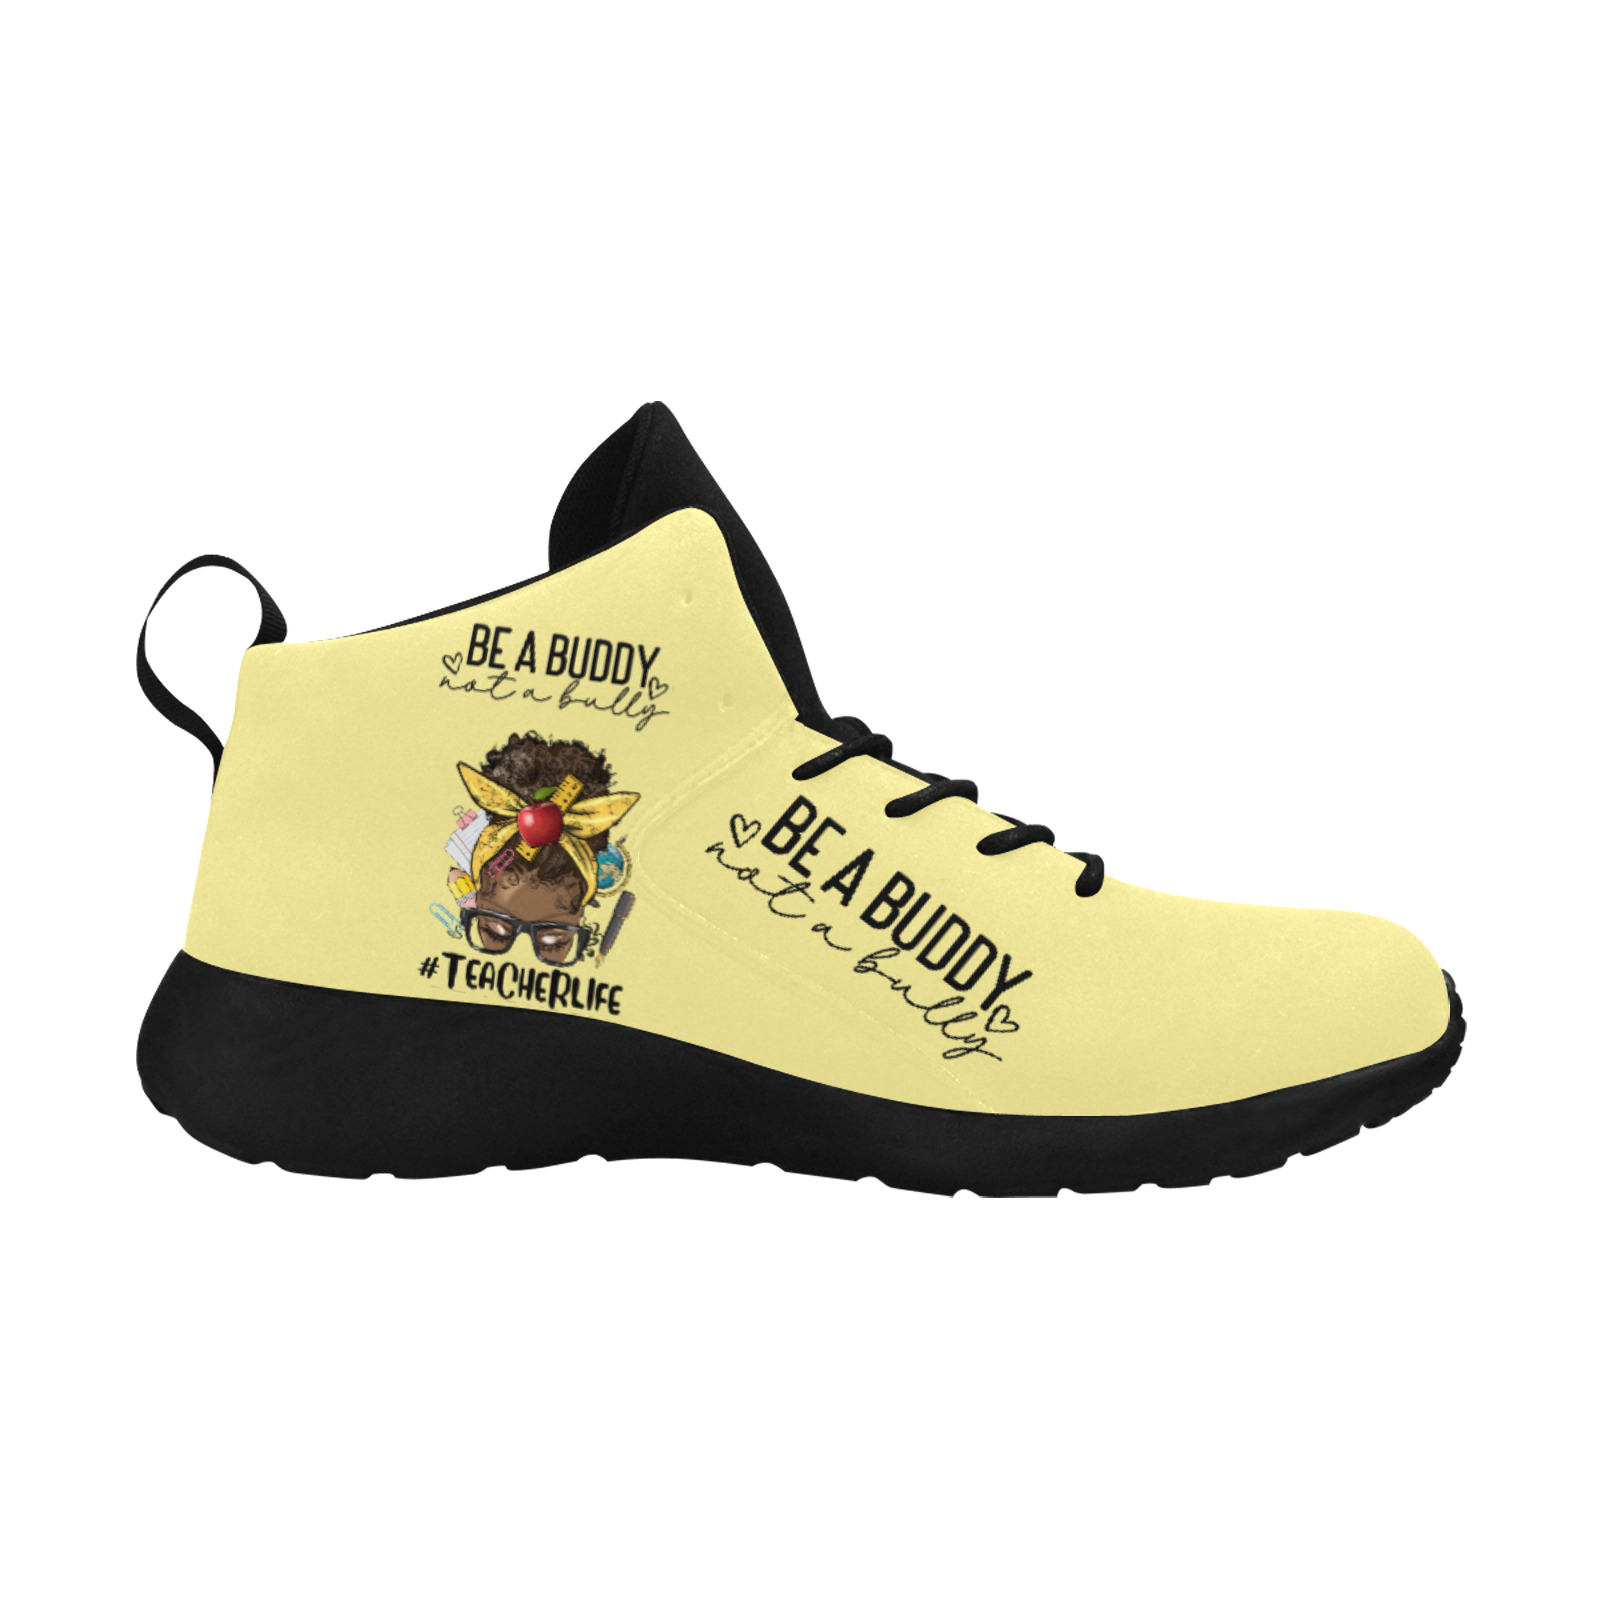 Be-a-buddy-not-a-bullyYellowShoe Women's Chukka Training Shoes (Model 57502)